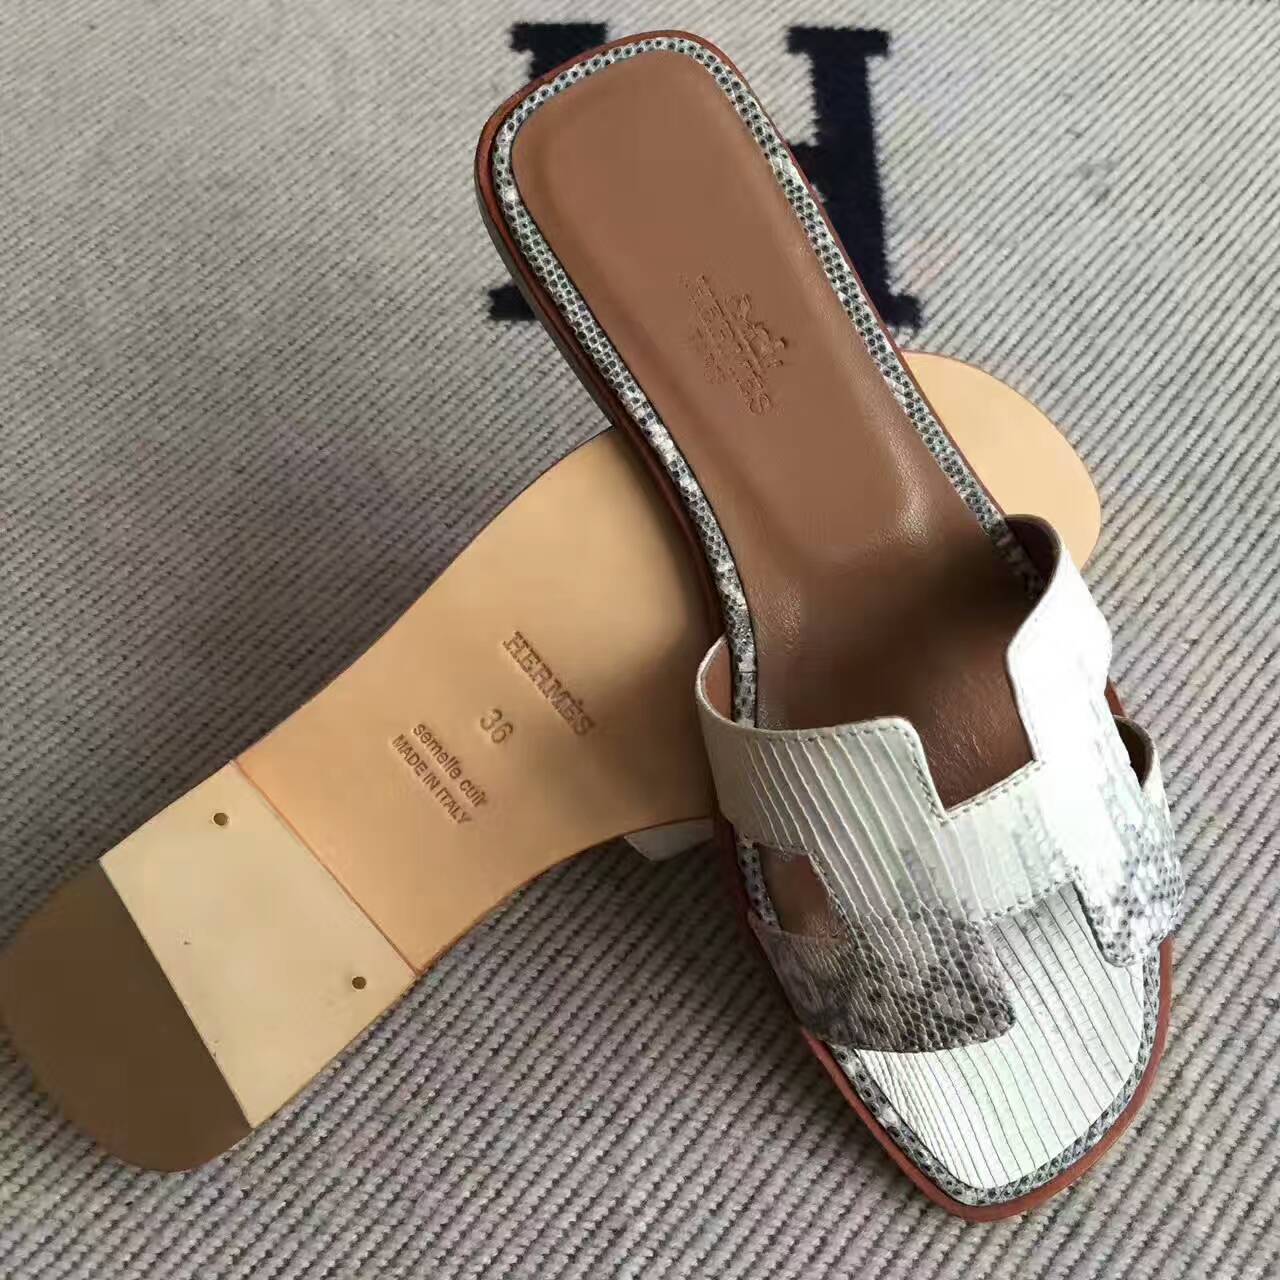 Wholesale Hermes Lizard Skin Sandals Shoes in 01 Original Color Size35-42#